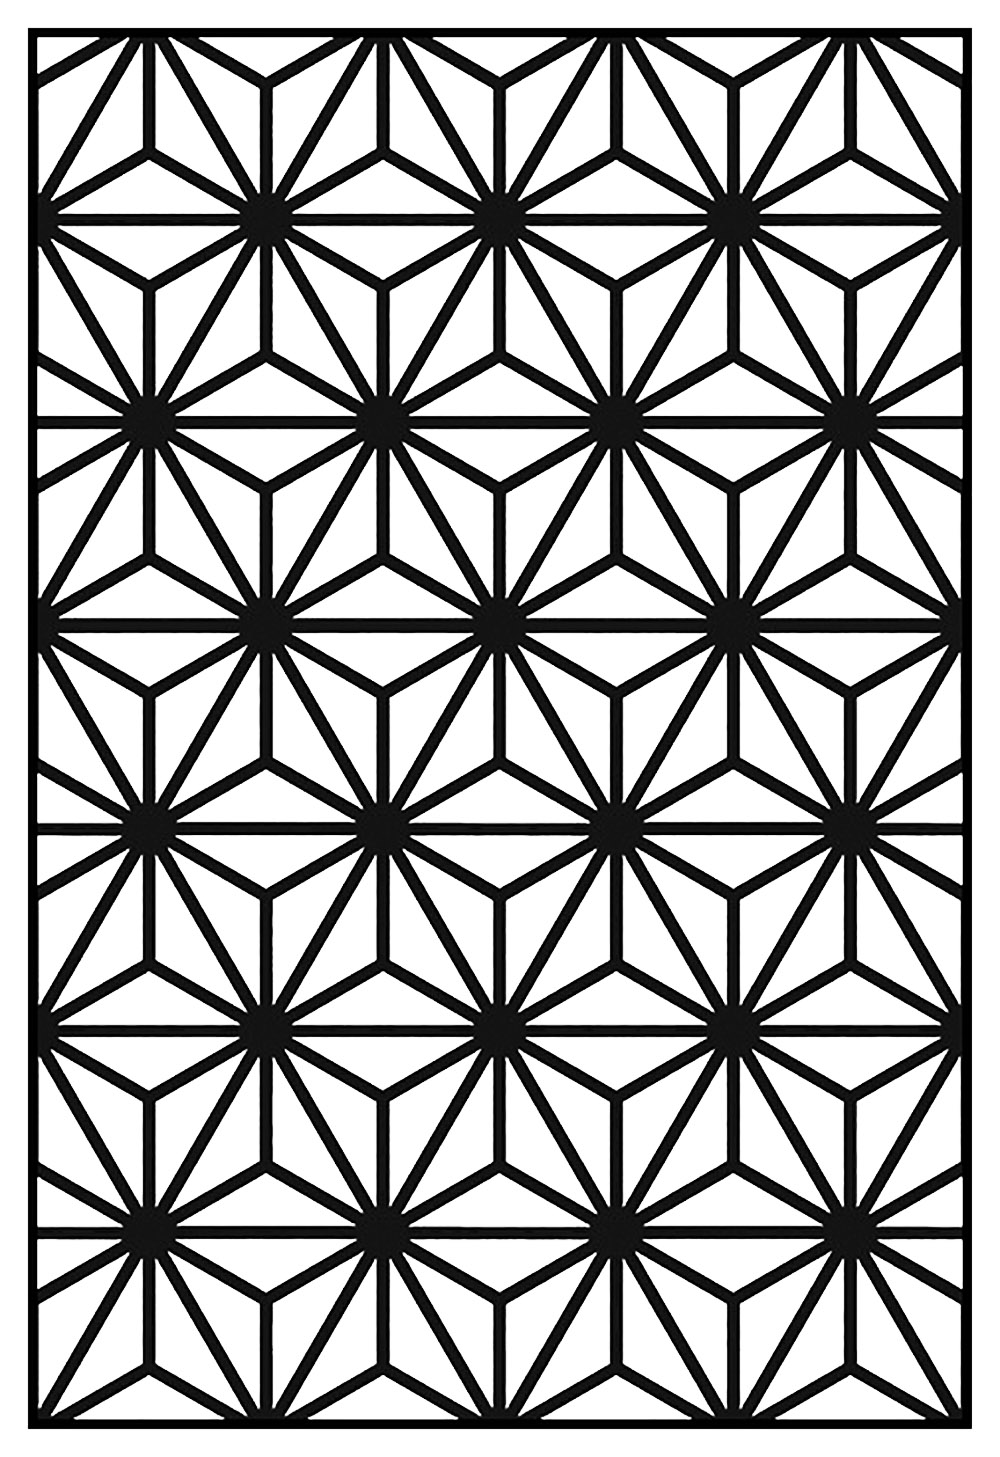 Geometric patterns art deco